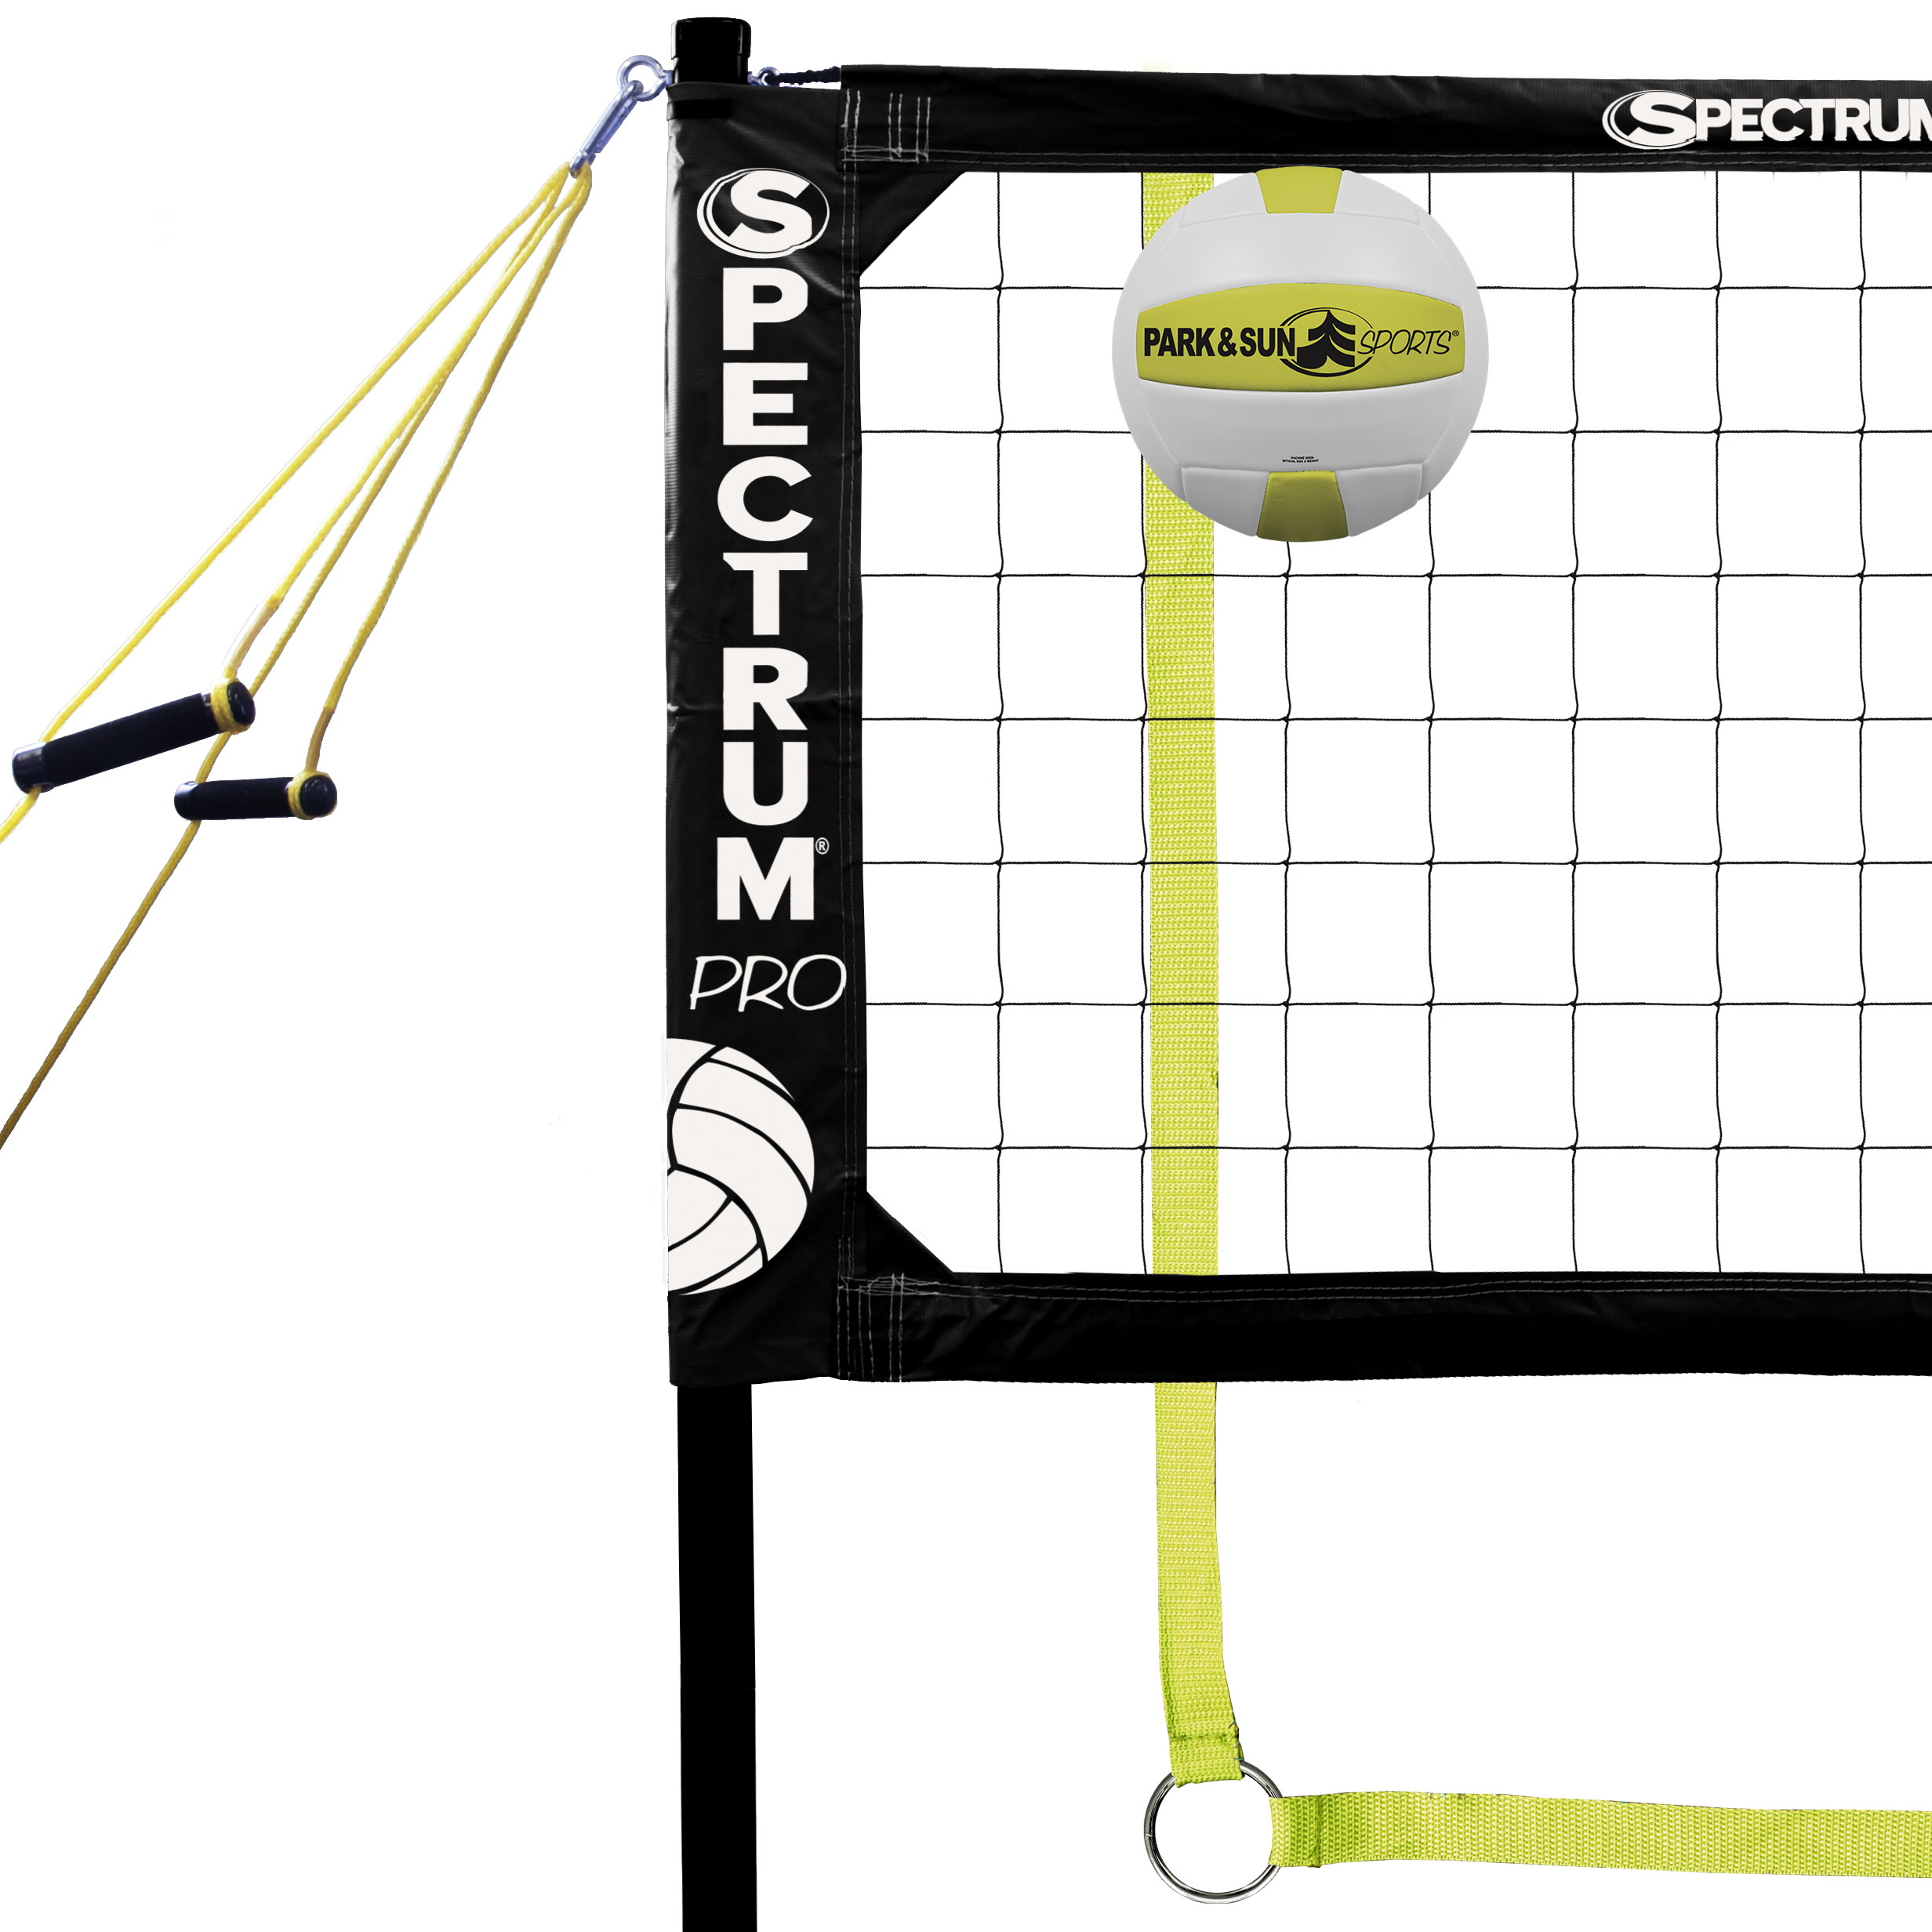 Spectrum PRO black portable outdoor volleyball set